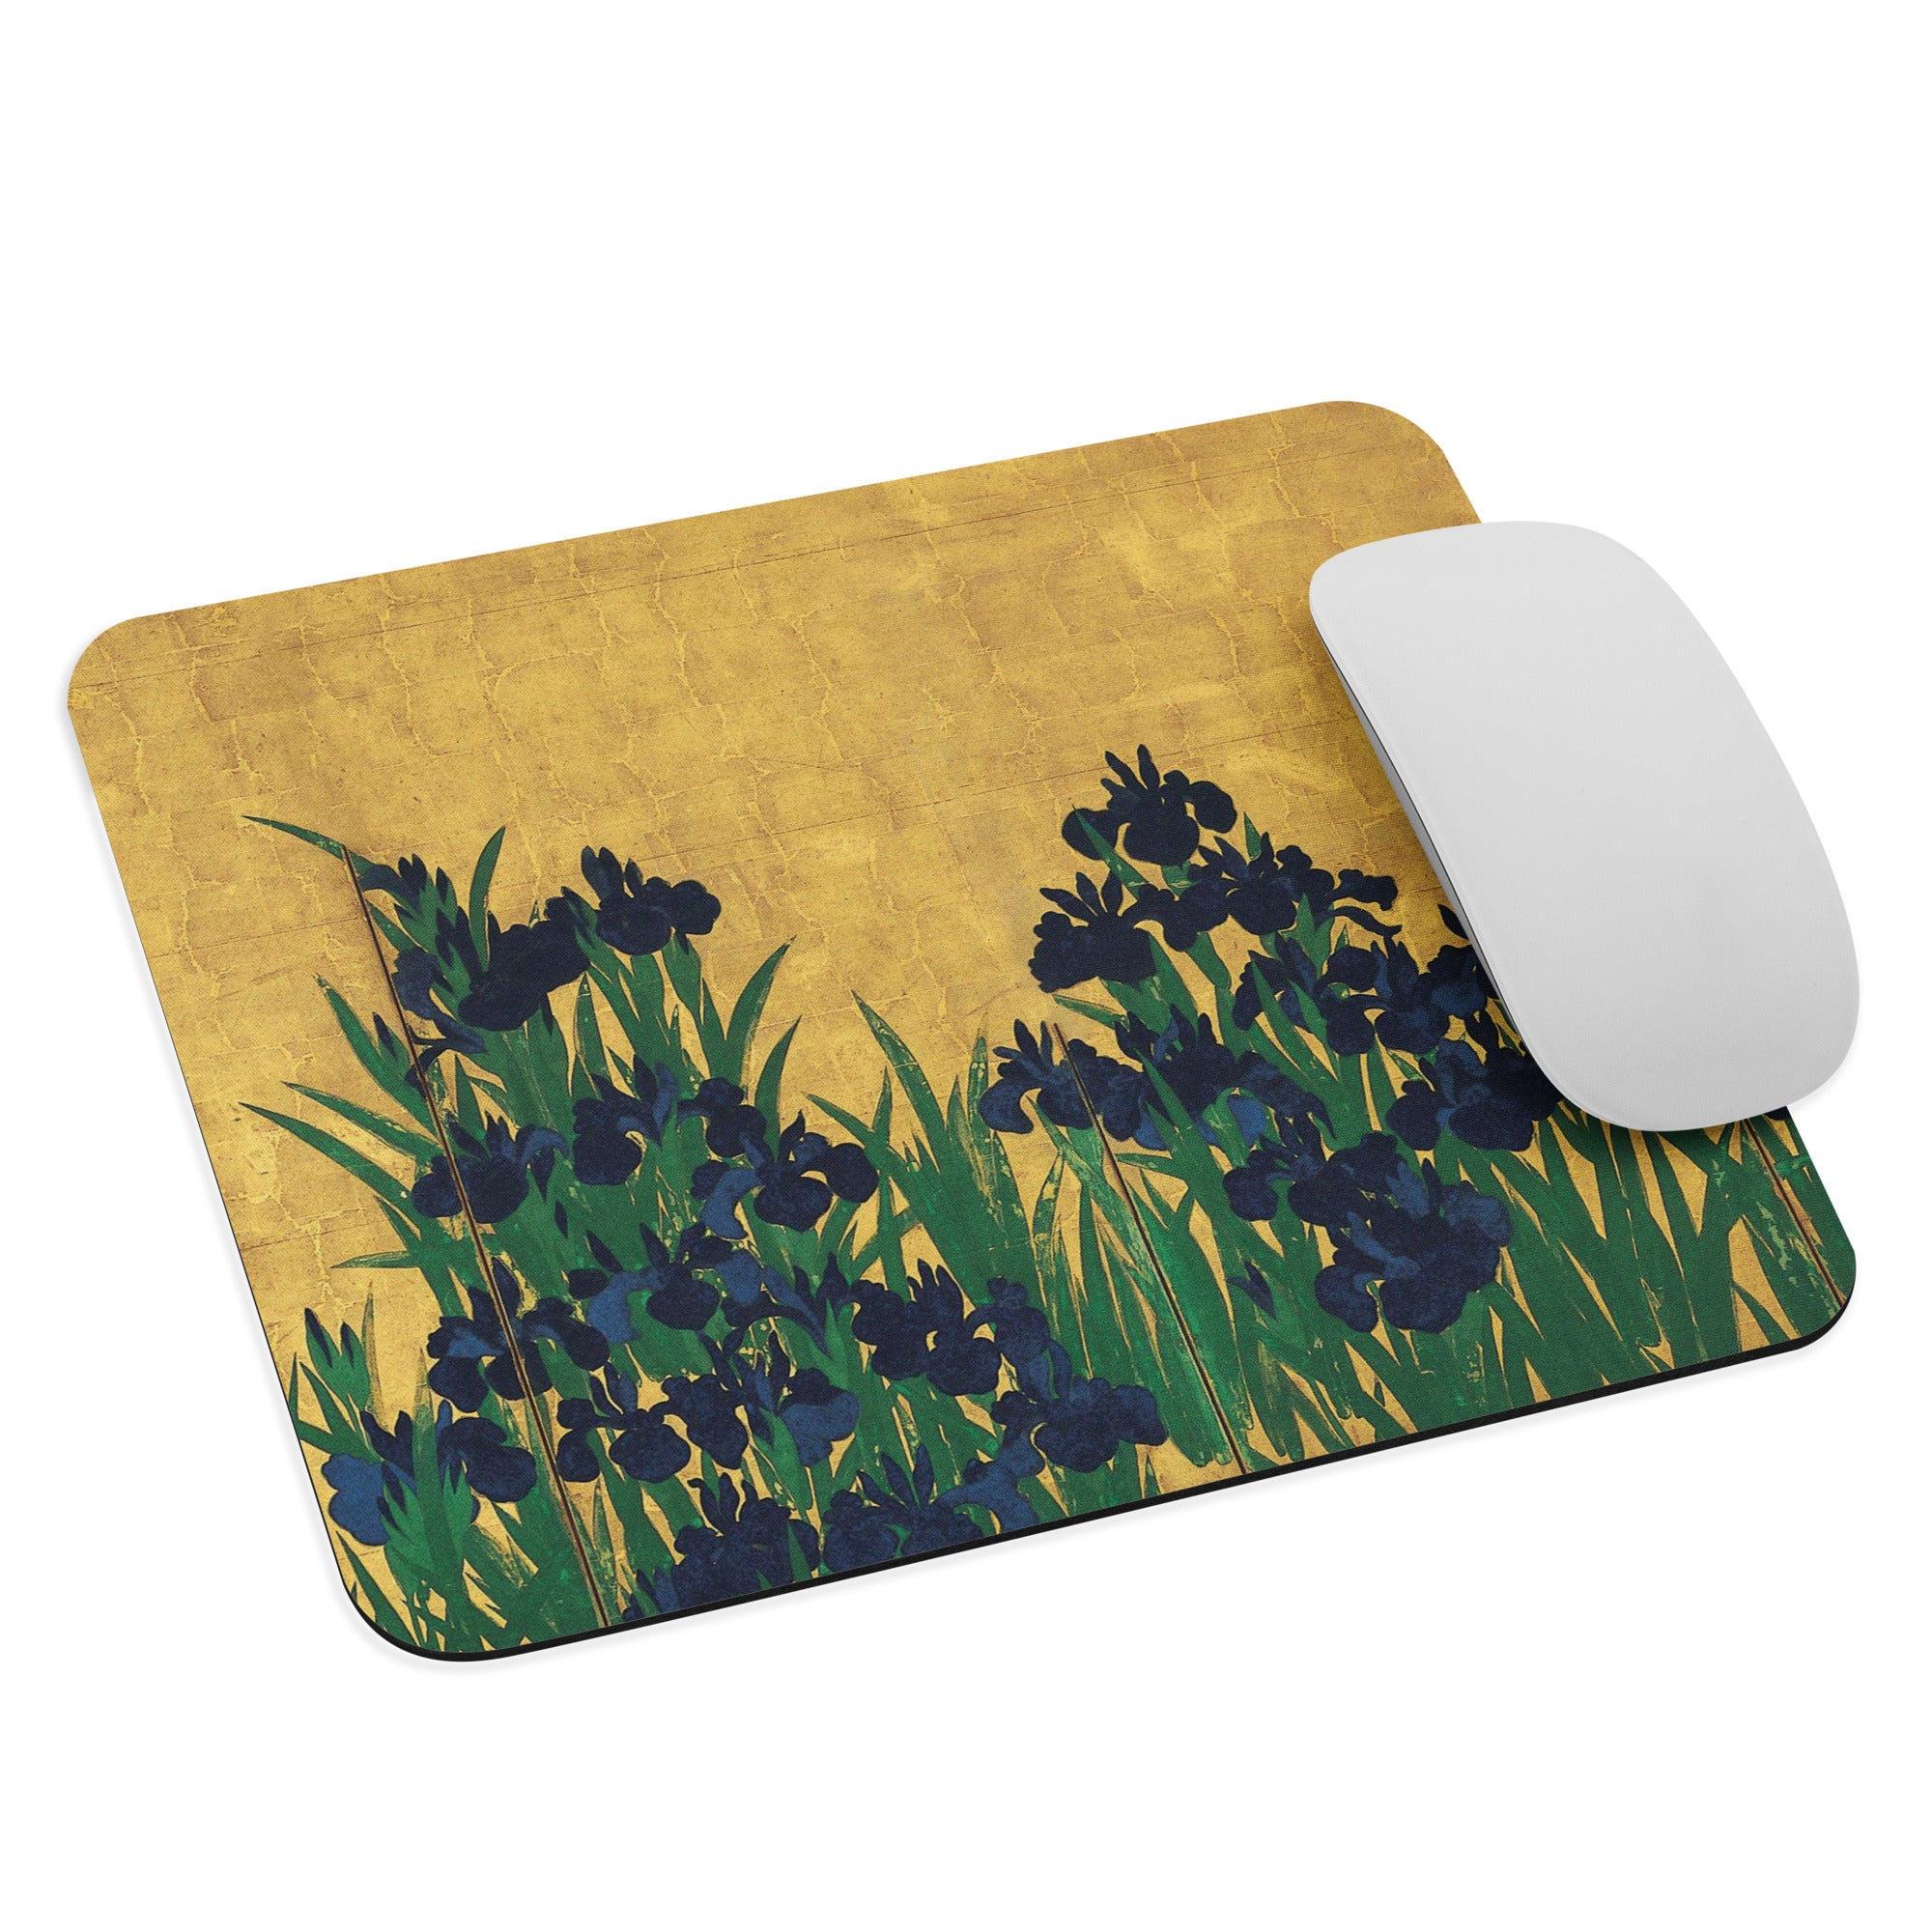 Ogata Kōrin ‘Irises’ Famous Painting Mouse Pad | Premium Art Mouse Pad